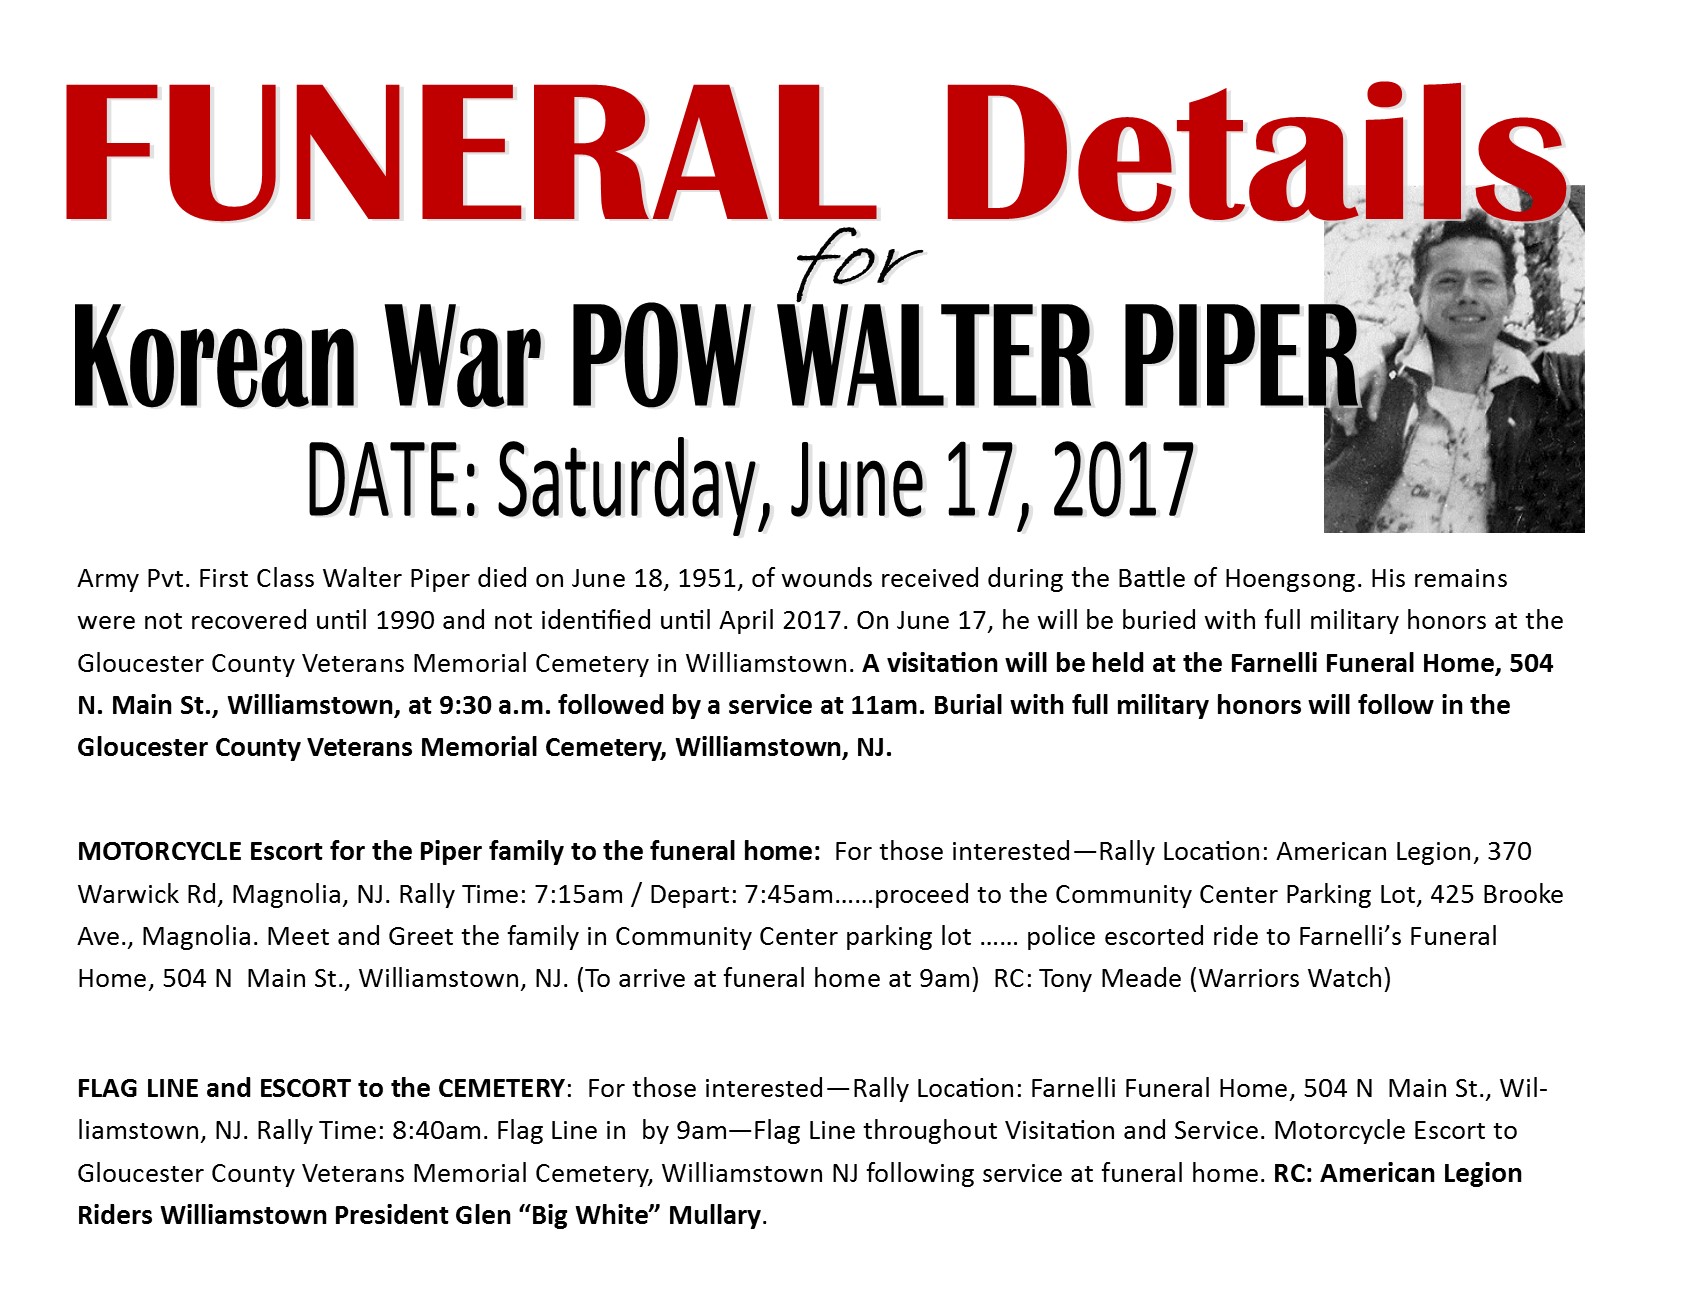 Korean War POW Walter Piper - Flag Line / Escort Funeral Home/Cemetery